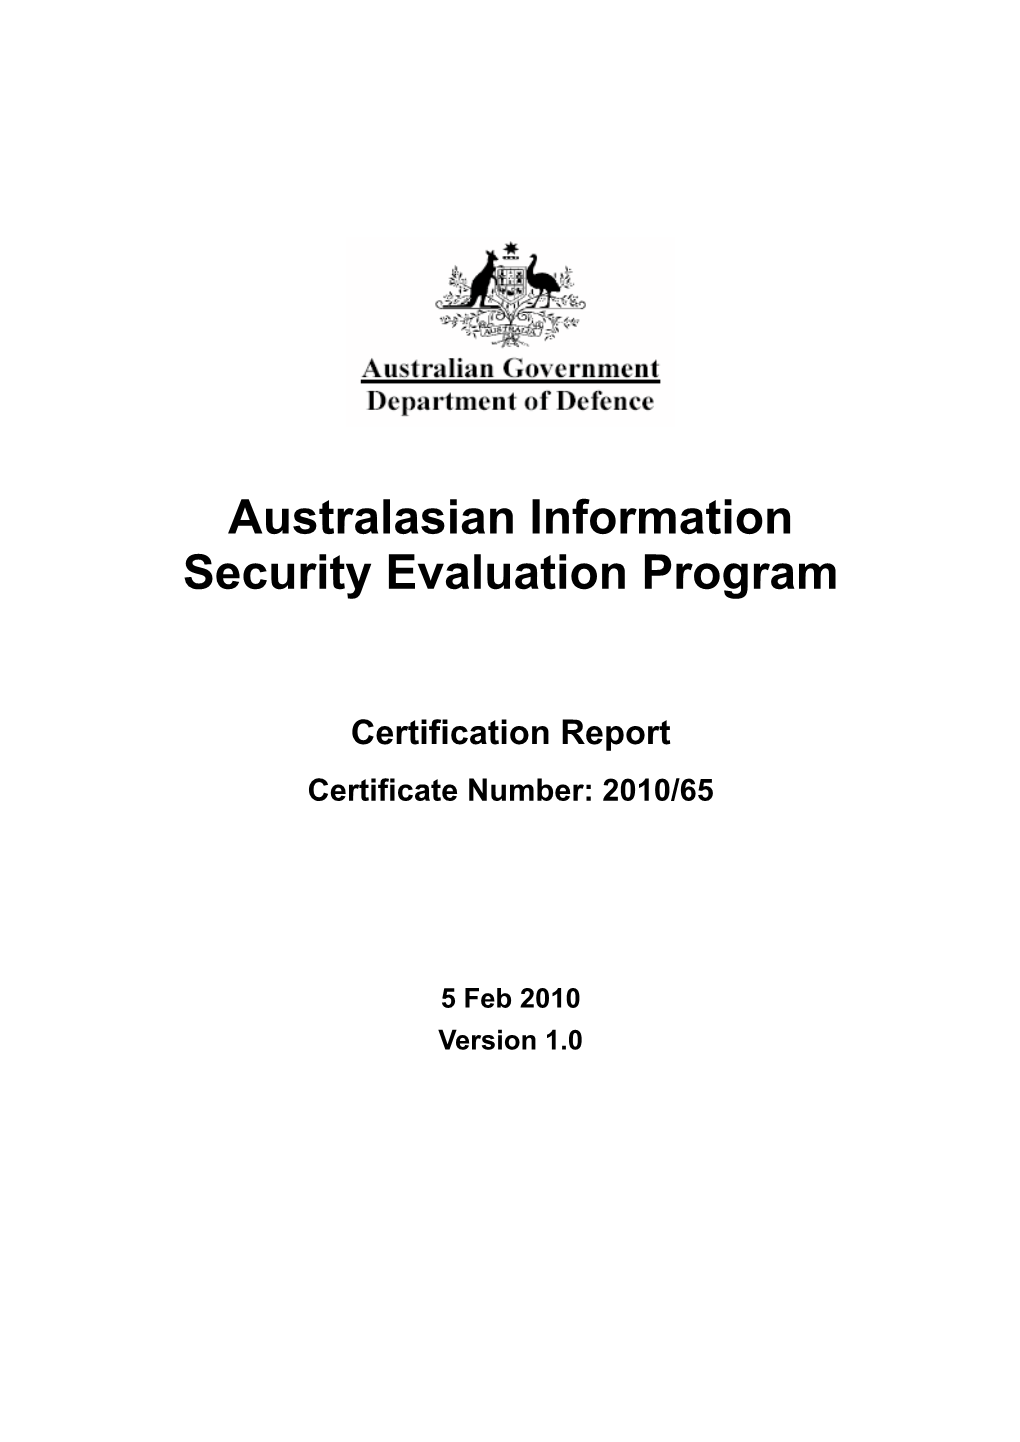 Certification Report Certificate Number: 2010/65